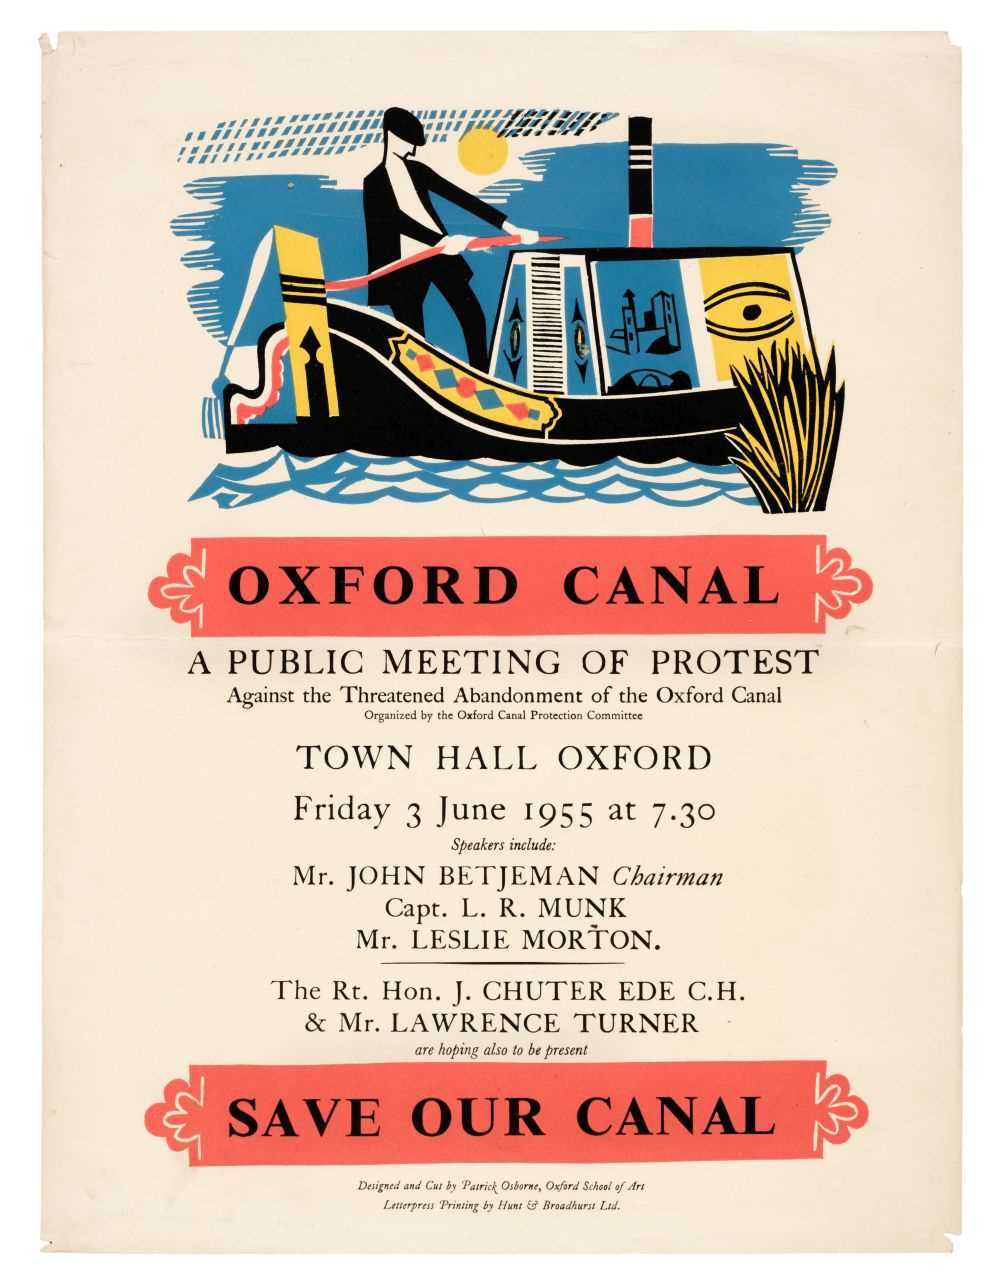 Lot 501 - Osborne (Patrick, illustrator). Oxford Canal